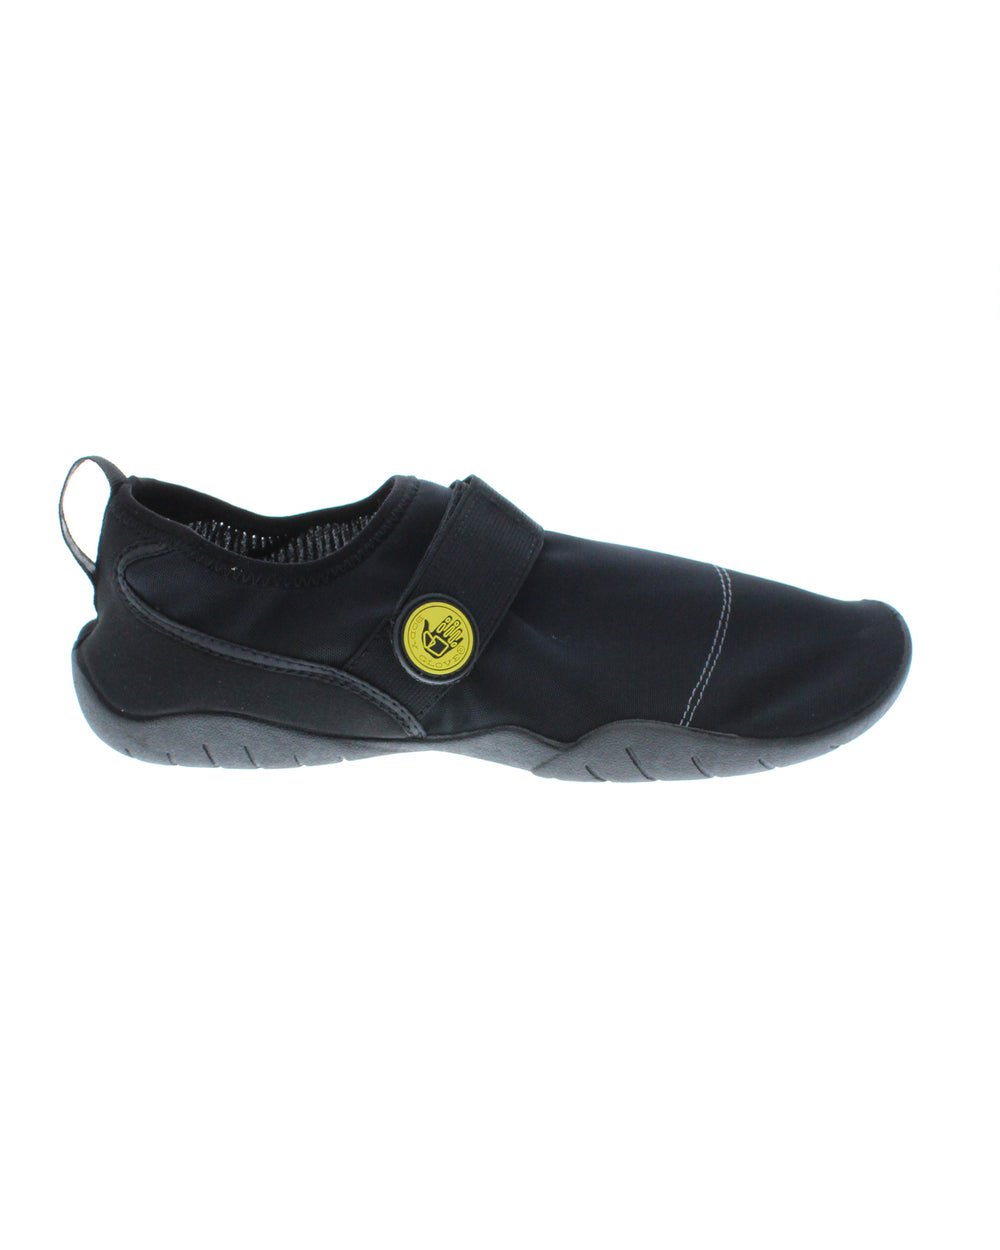 Kids Aqua Glove Water Shoes - Black/Yellow